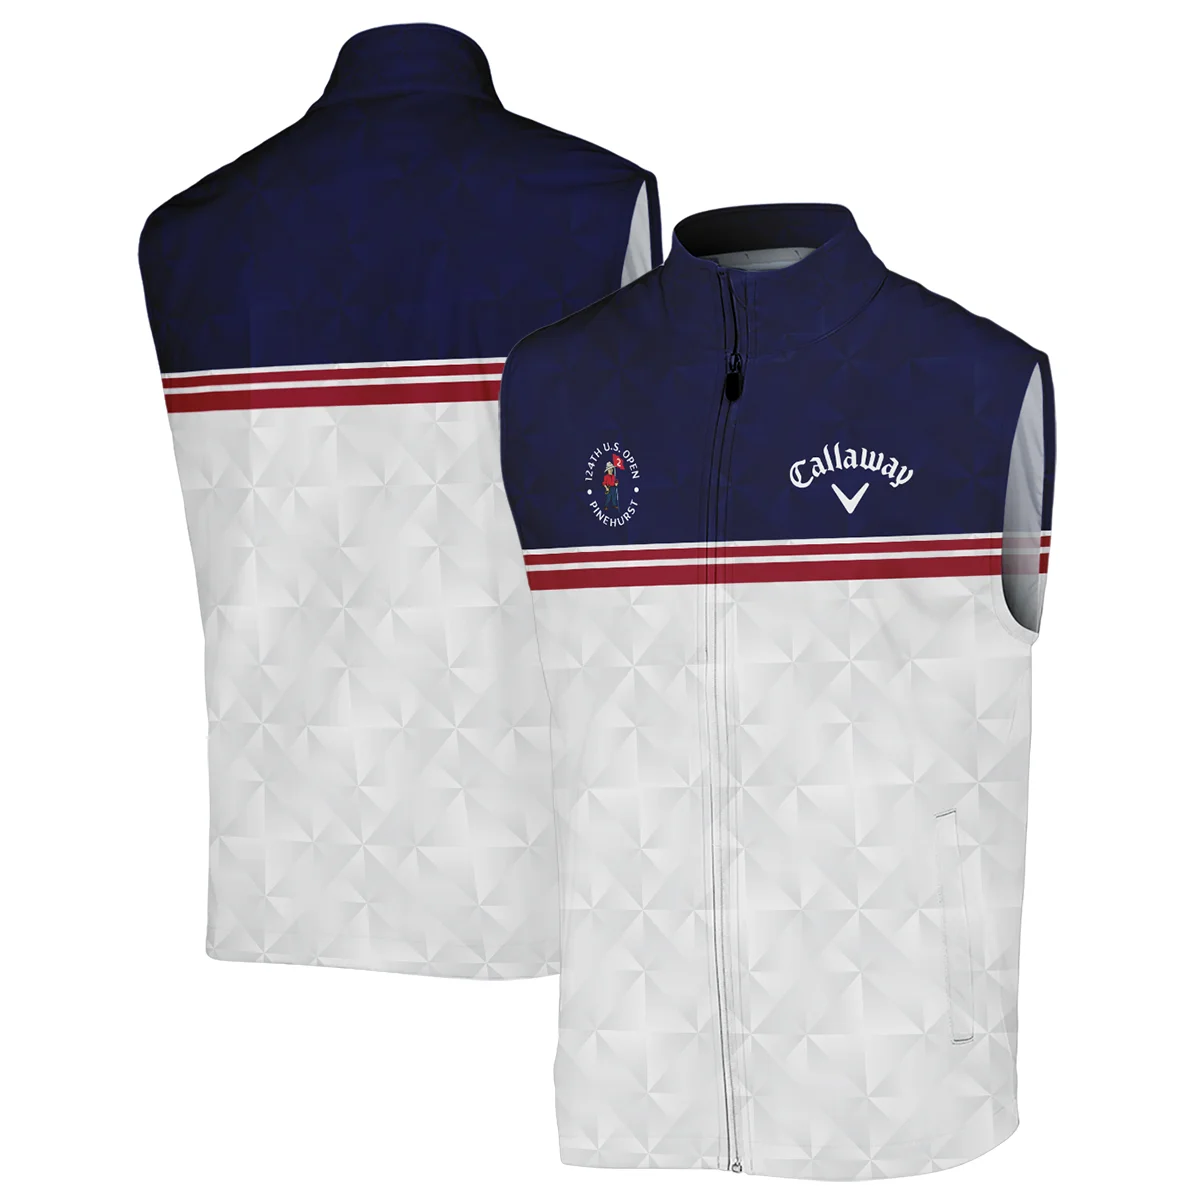 Golf Sport 124th U.S. Open Pinehurst Callaway Unisex T-Shirt Dark Blue White Abstract Geometric Triangles All Over Print T-Shirt